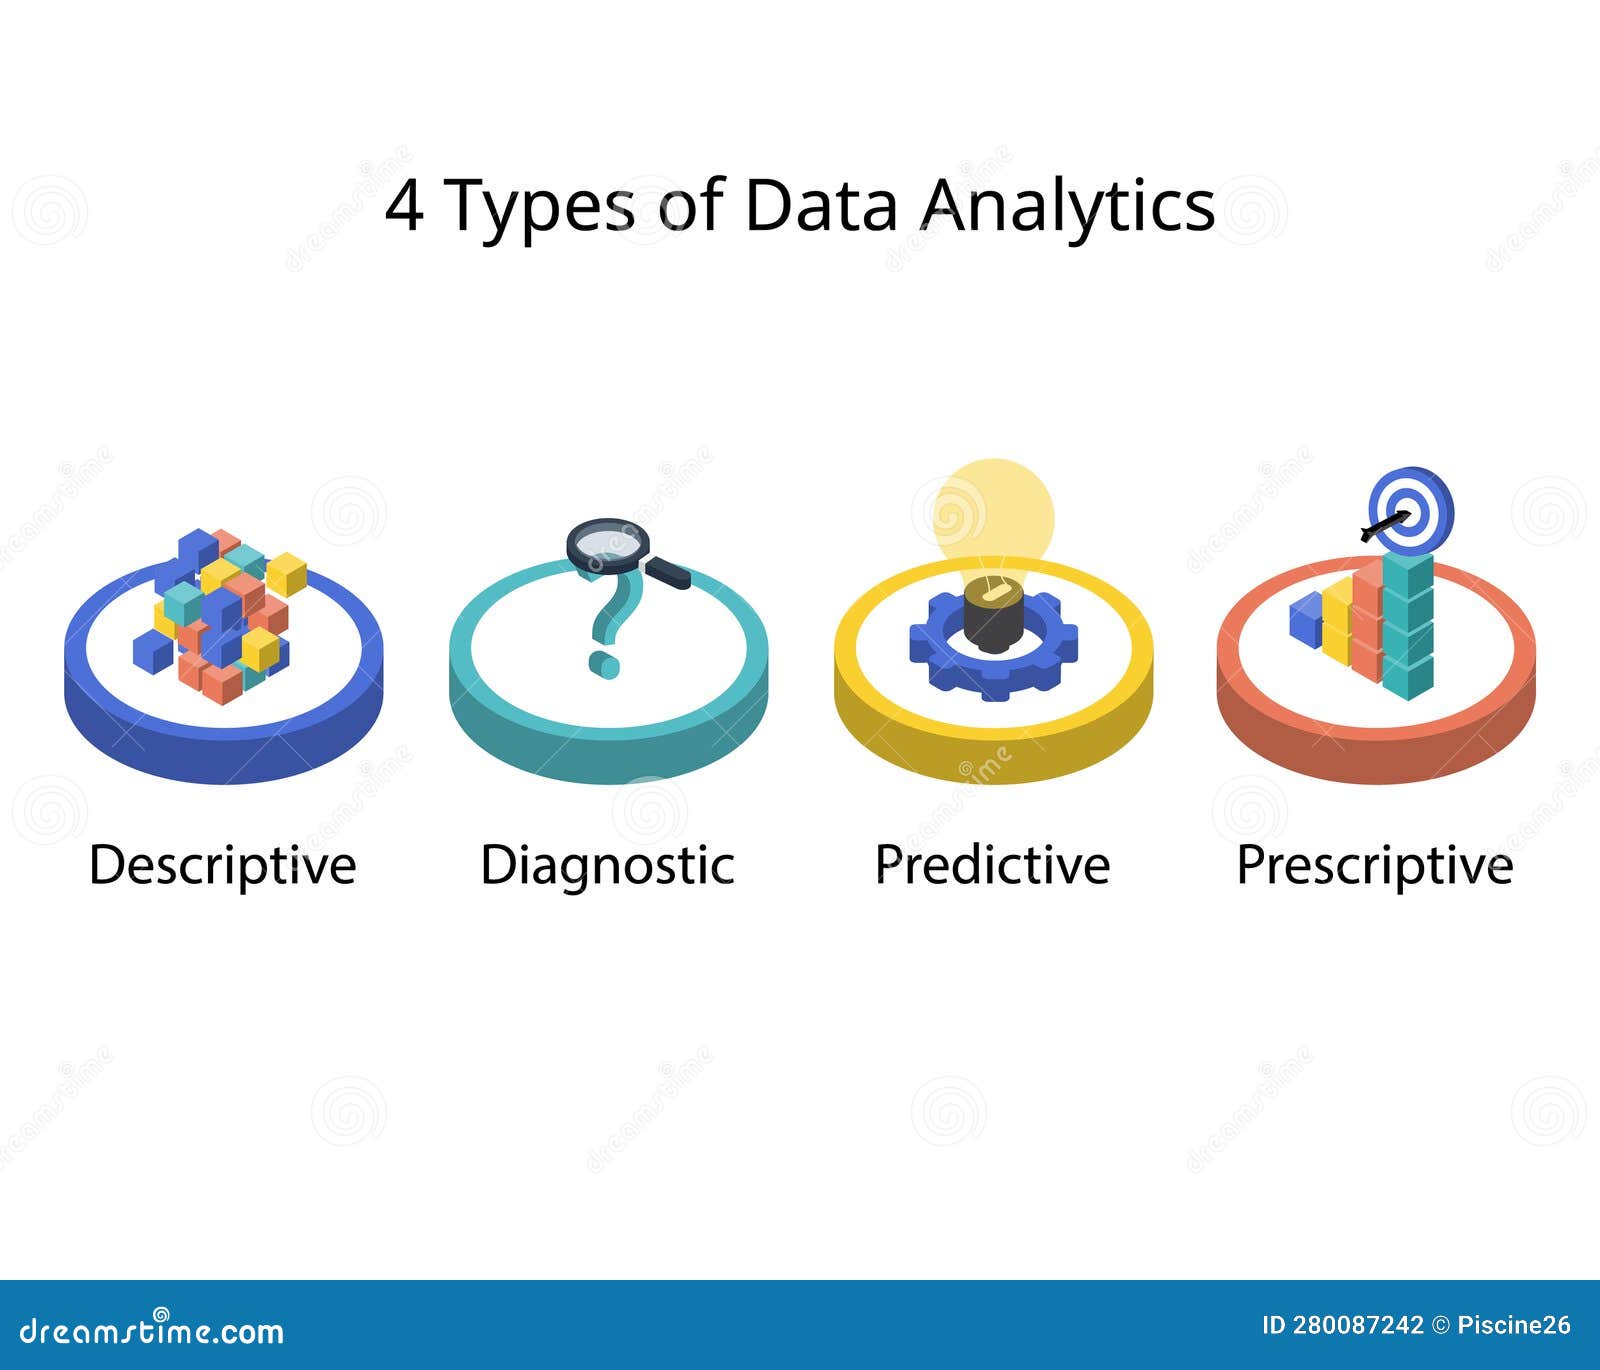 the 4 types of data analytics for descriptive, diagnostic, predictive, prescriptive analytics